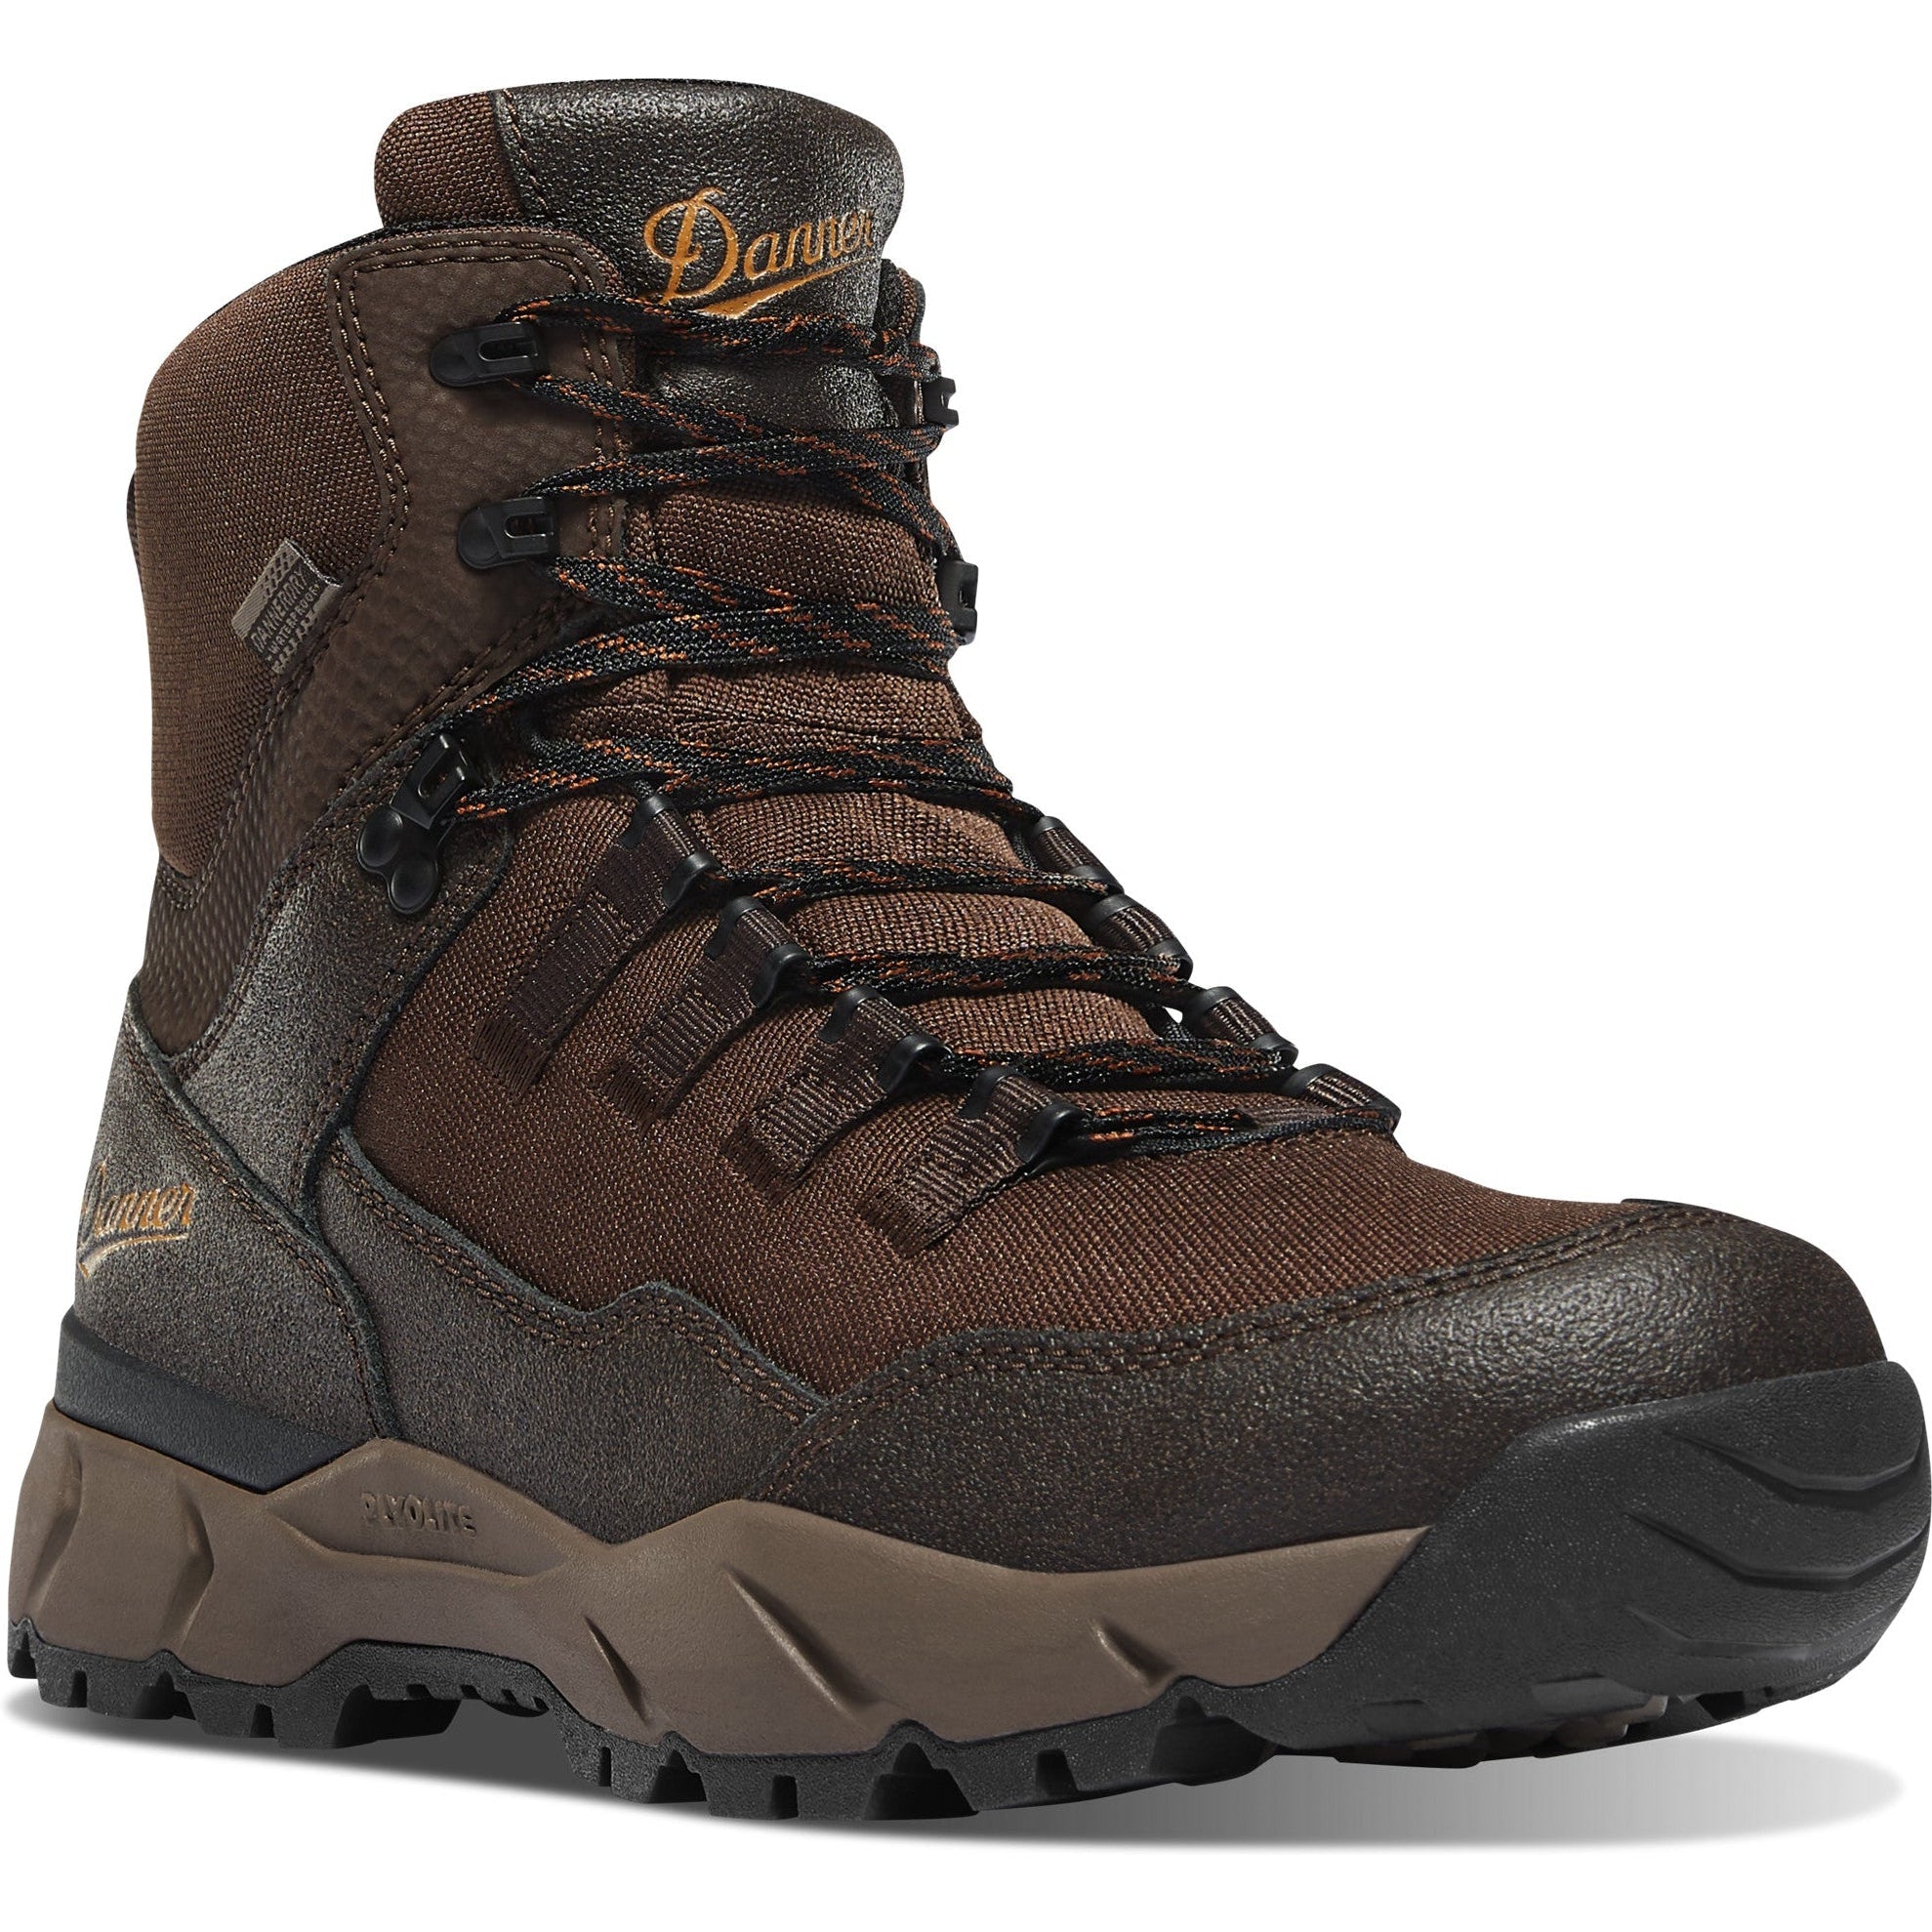 Danner Men's Vital Trail 6" WP Hiking Boot - Coffee Brown - 65300 7 / Medium / Brown - Overlook Boots